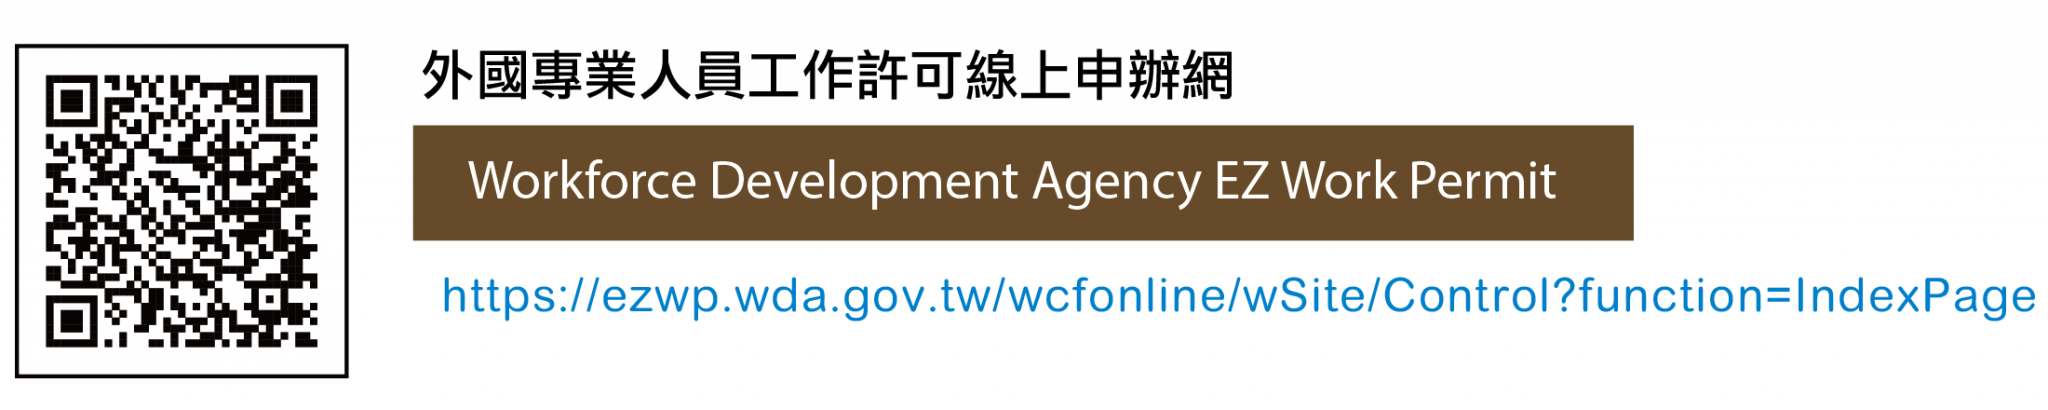 The quick links of Workforce Development Agency EZ Work Permit.